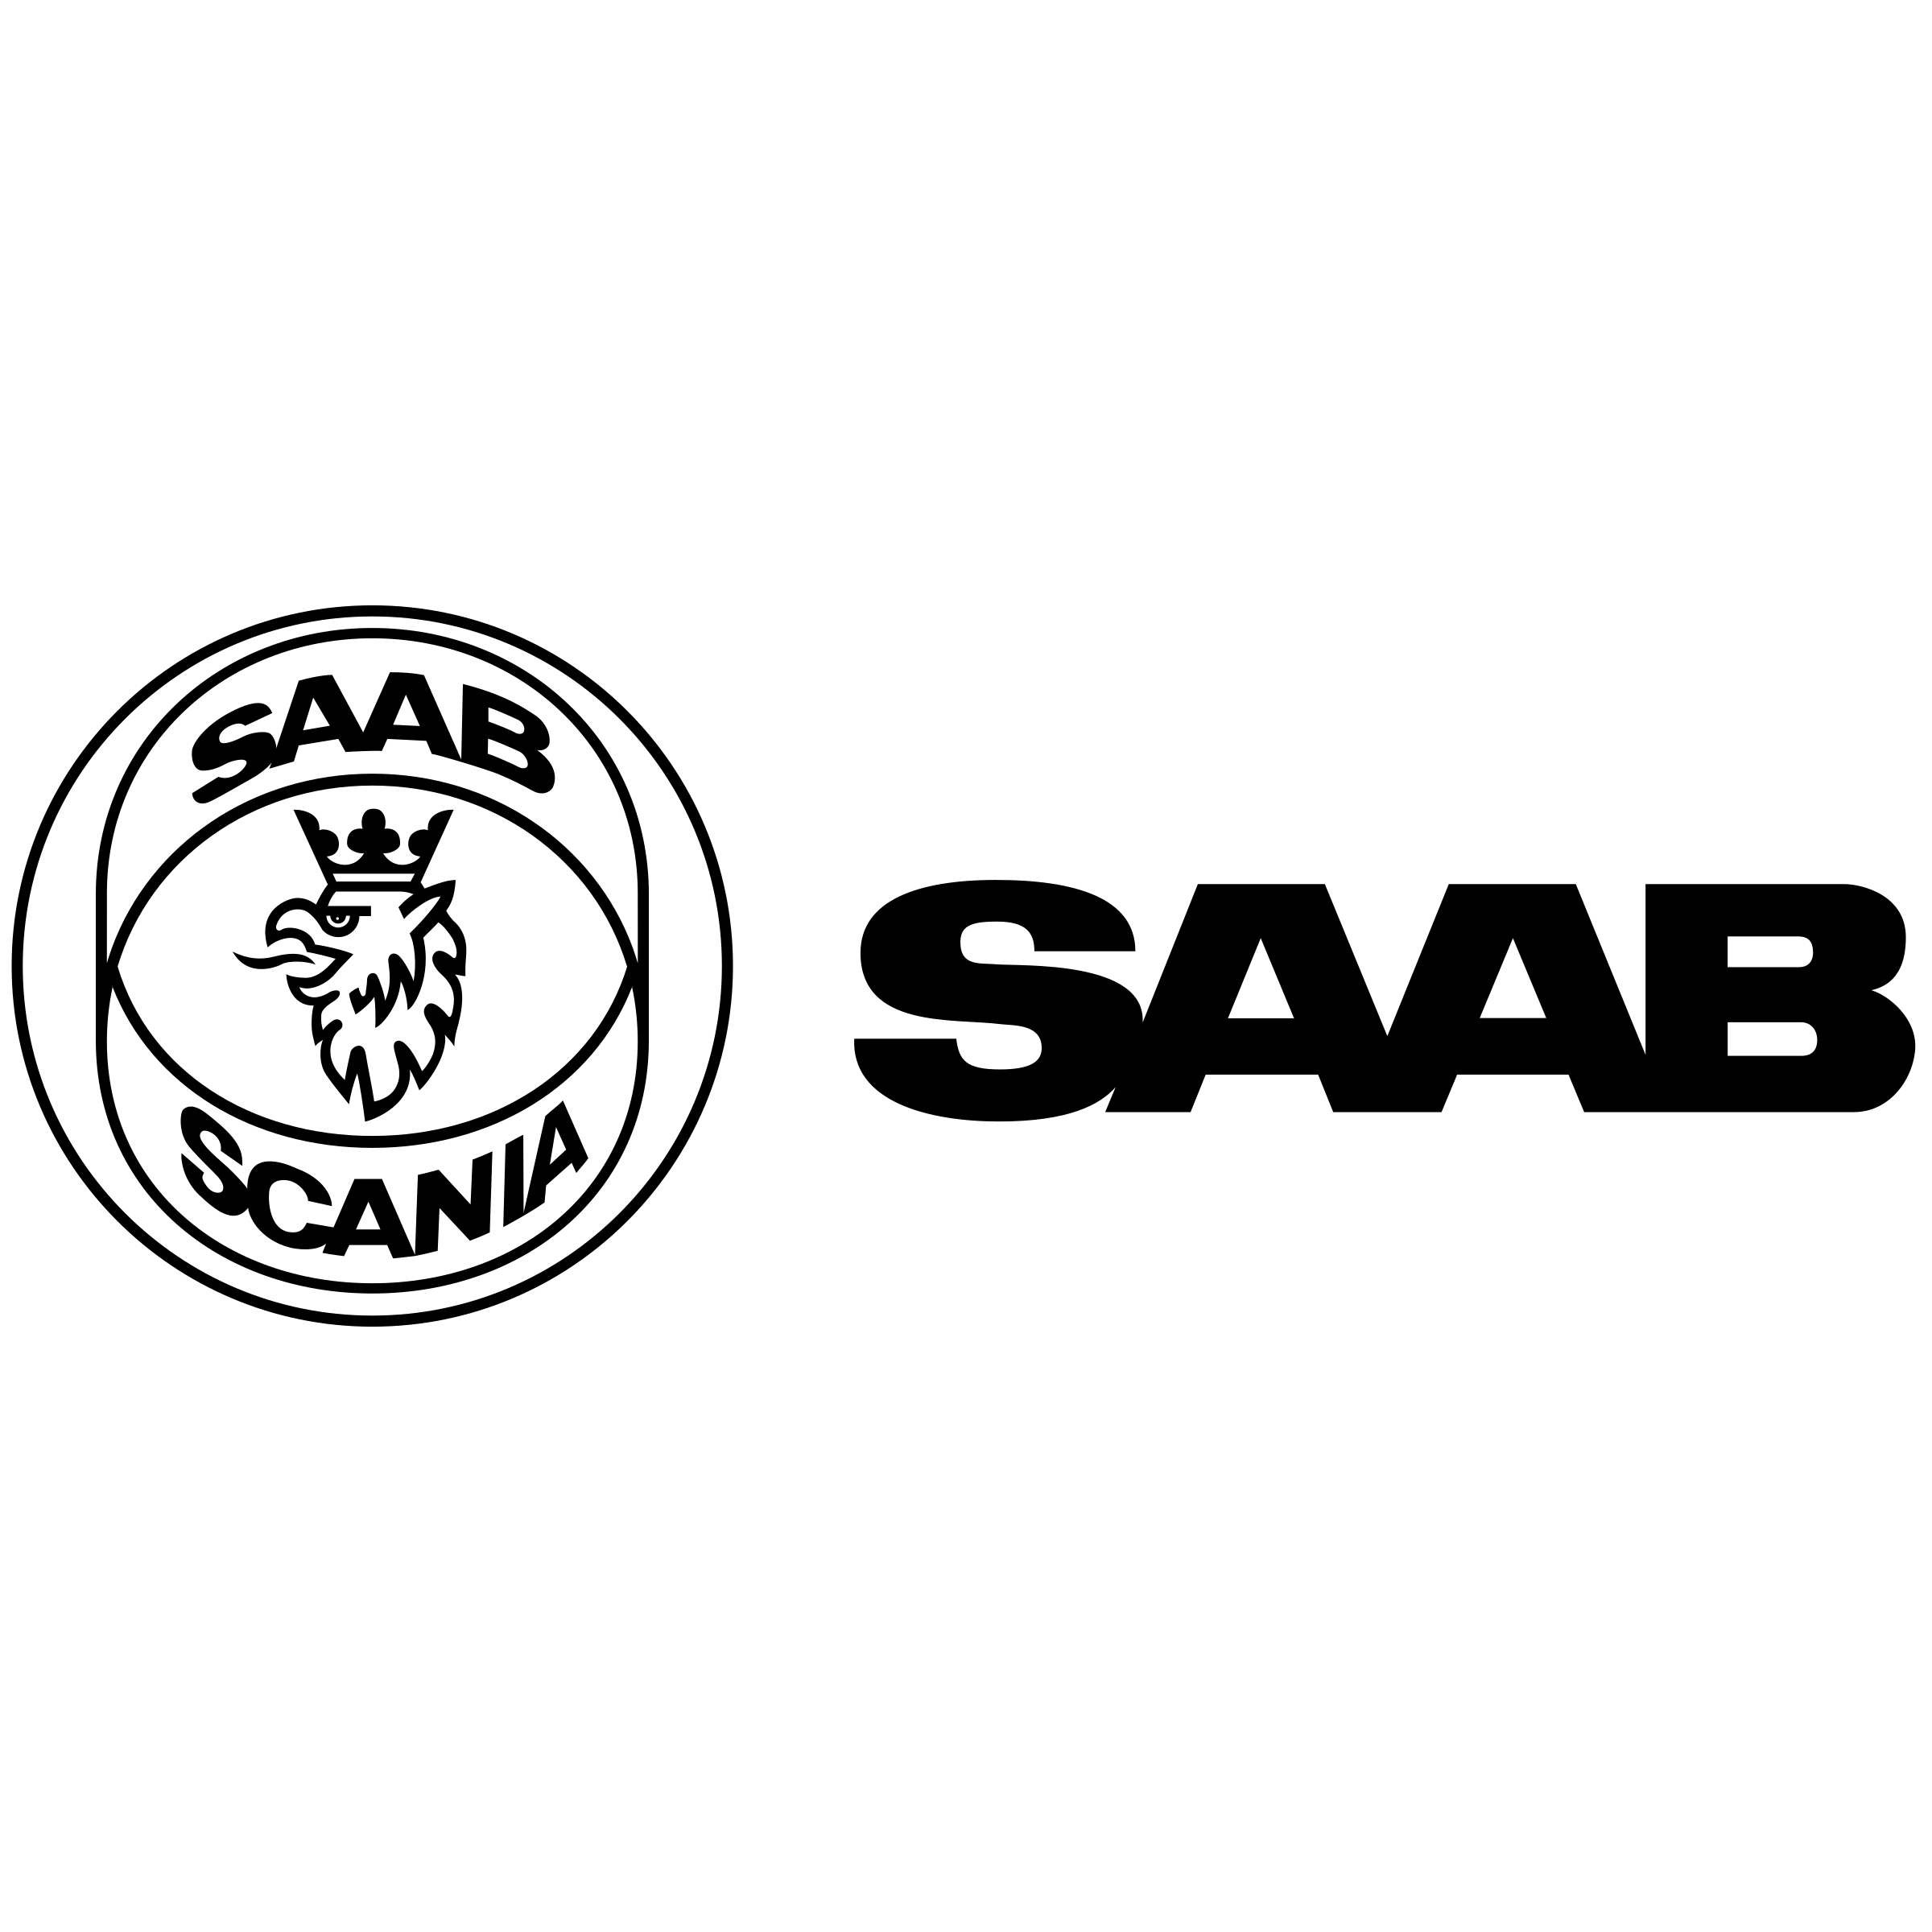 Saab-Scania Logo - SAAB Scania Logo PNG Transparent & SVG Vector - Freebie Supply